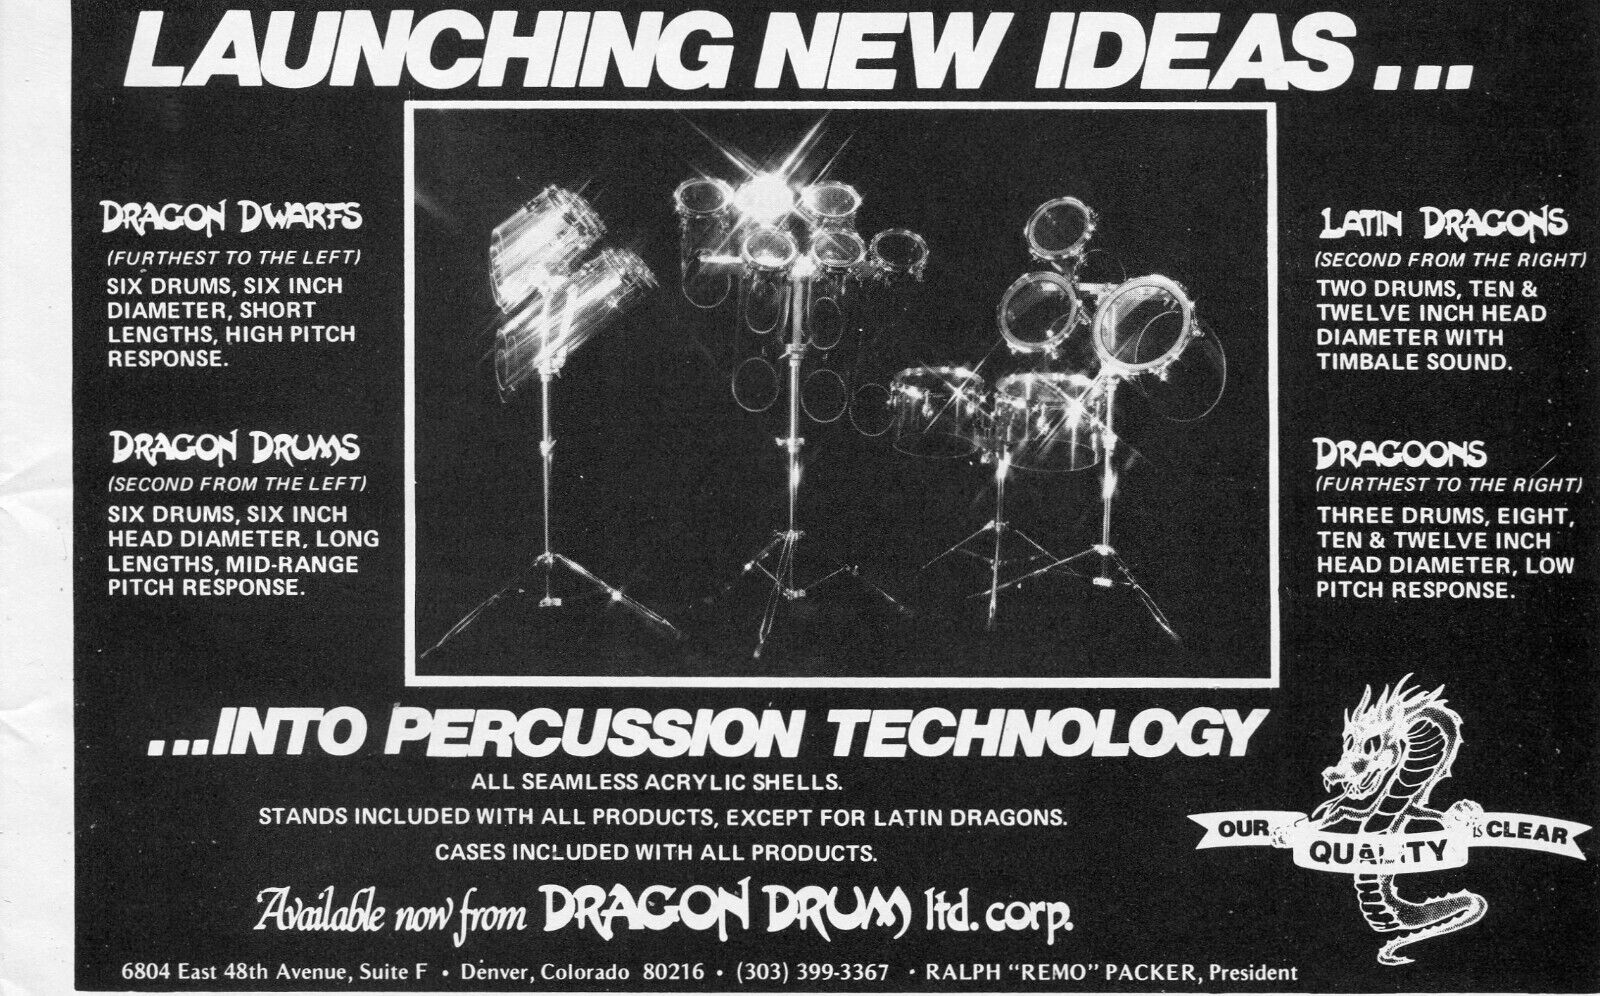 1980 Print Ad of Acrylic Dragon Drums, Dragon Dwarfs, Latin Dragons & Dragoons